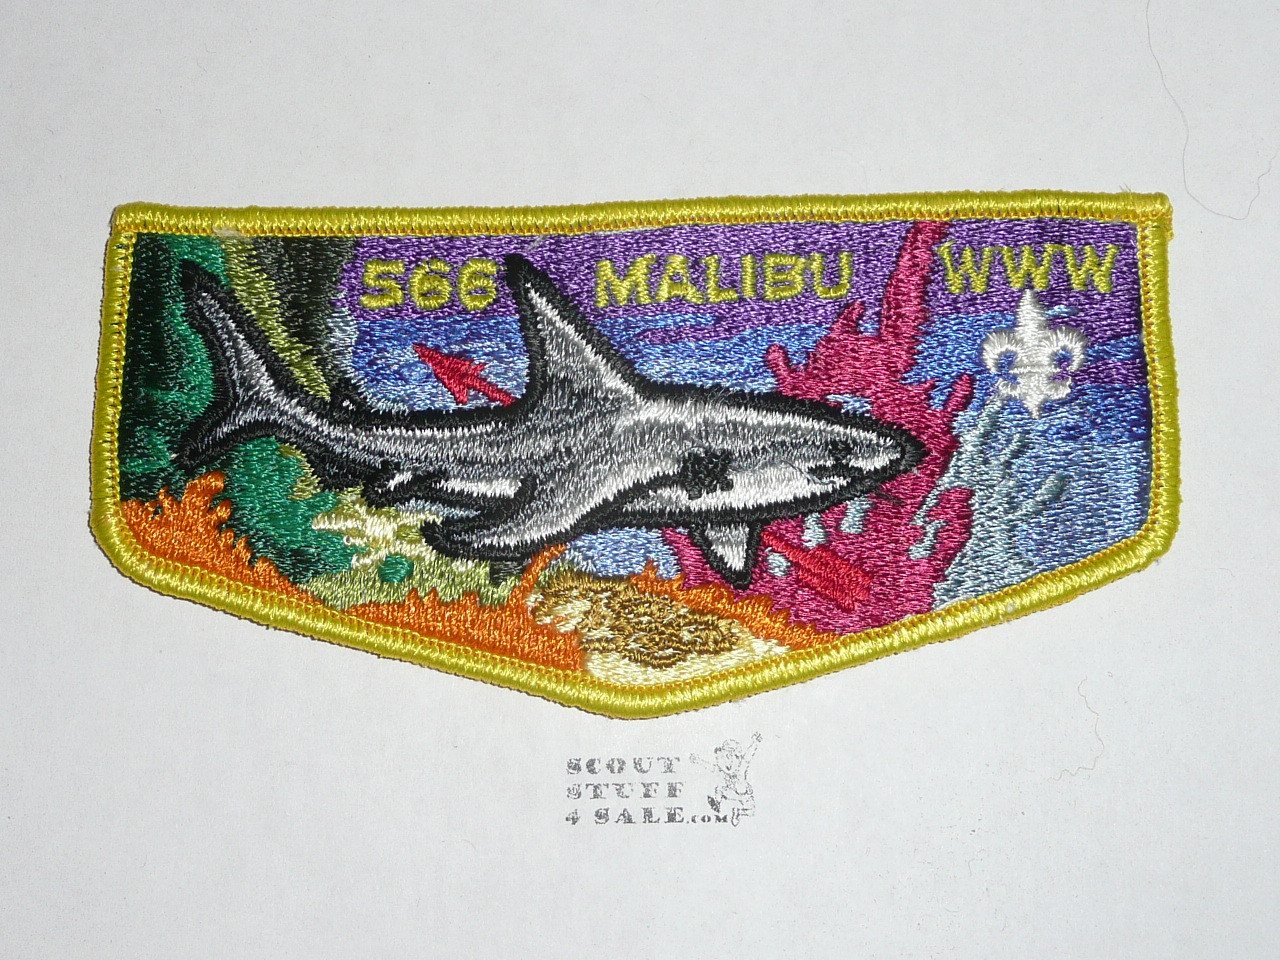 Order of the Arrow Lodge #566 Malibu s7 Flap Patch, Service Award